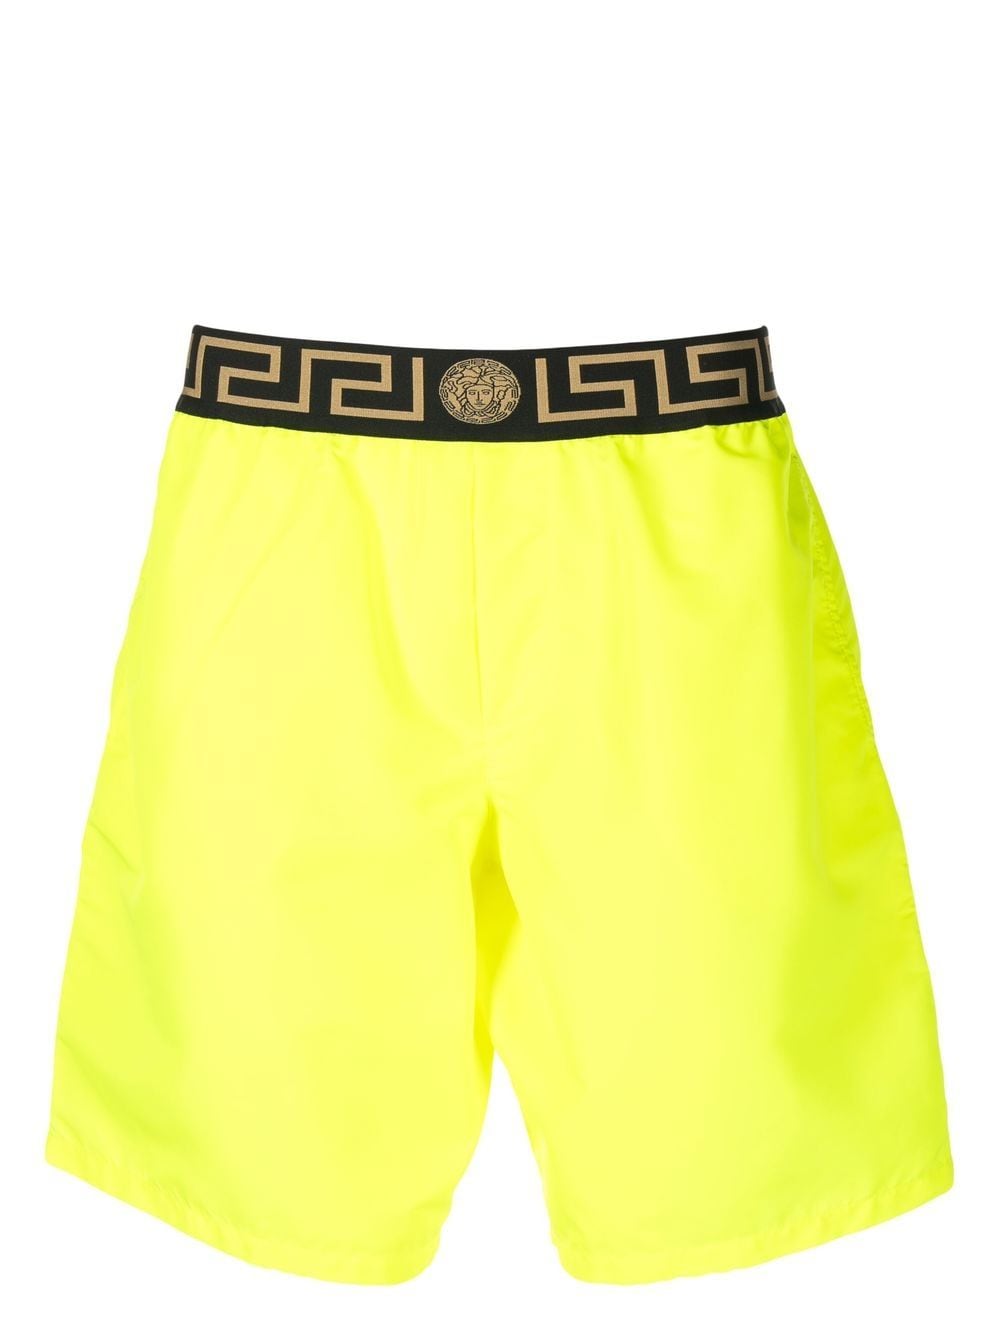 Versace Greca border swim shorts - Yellow